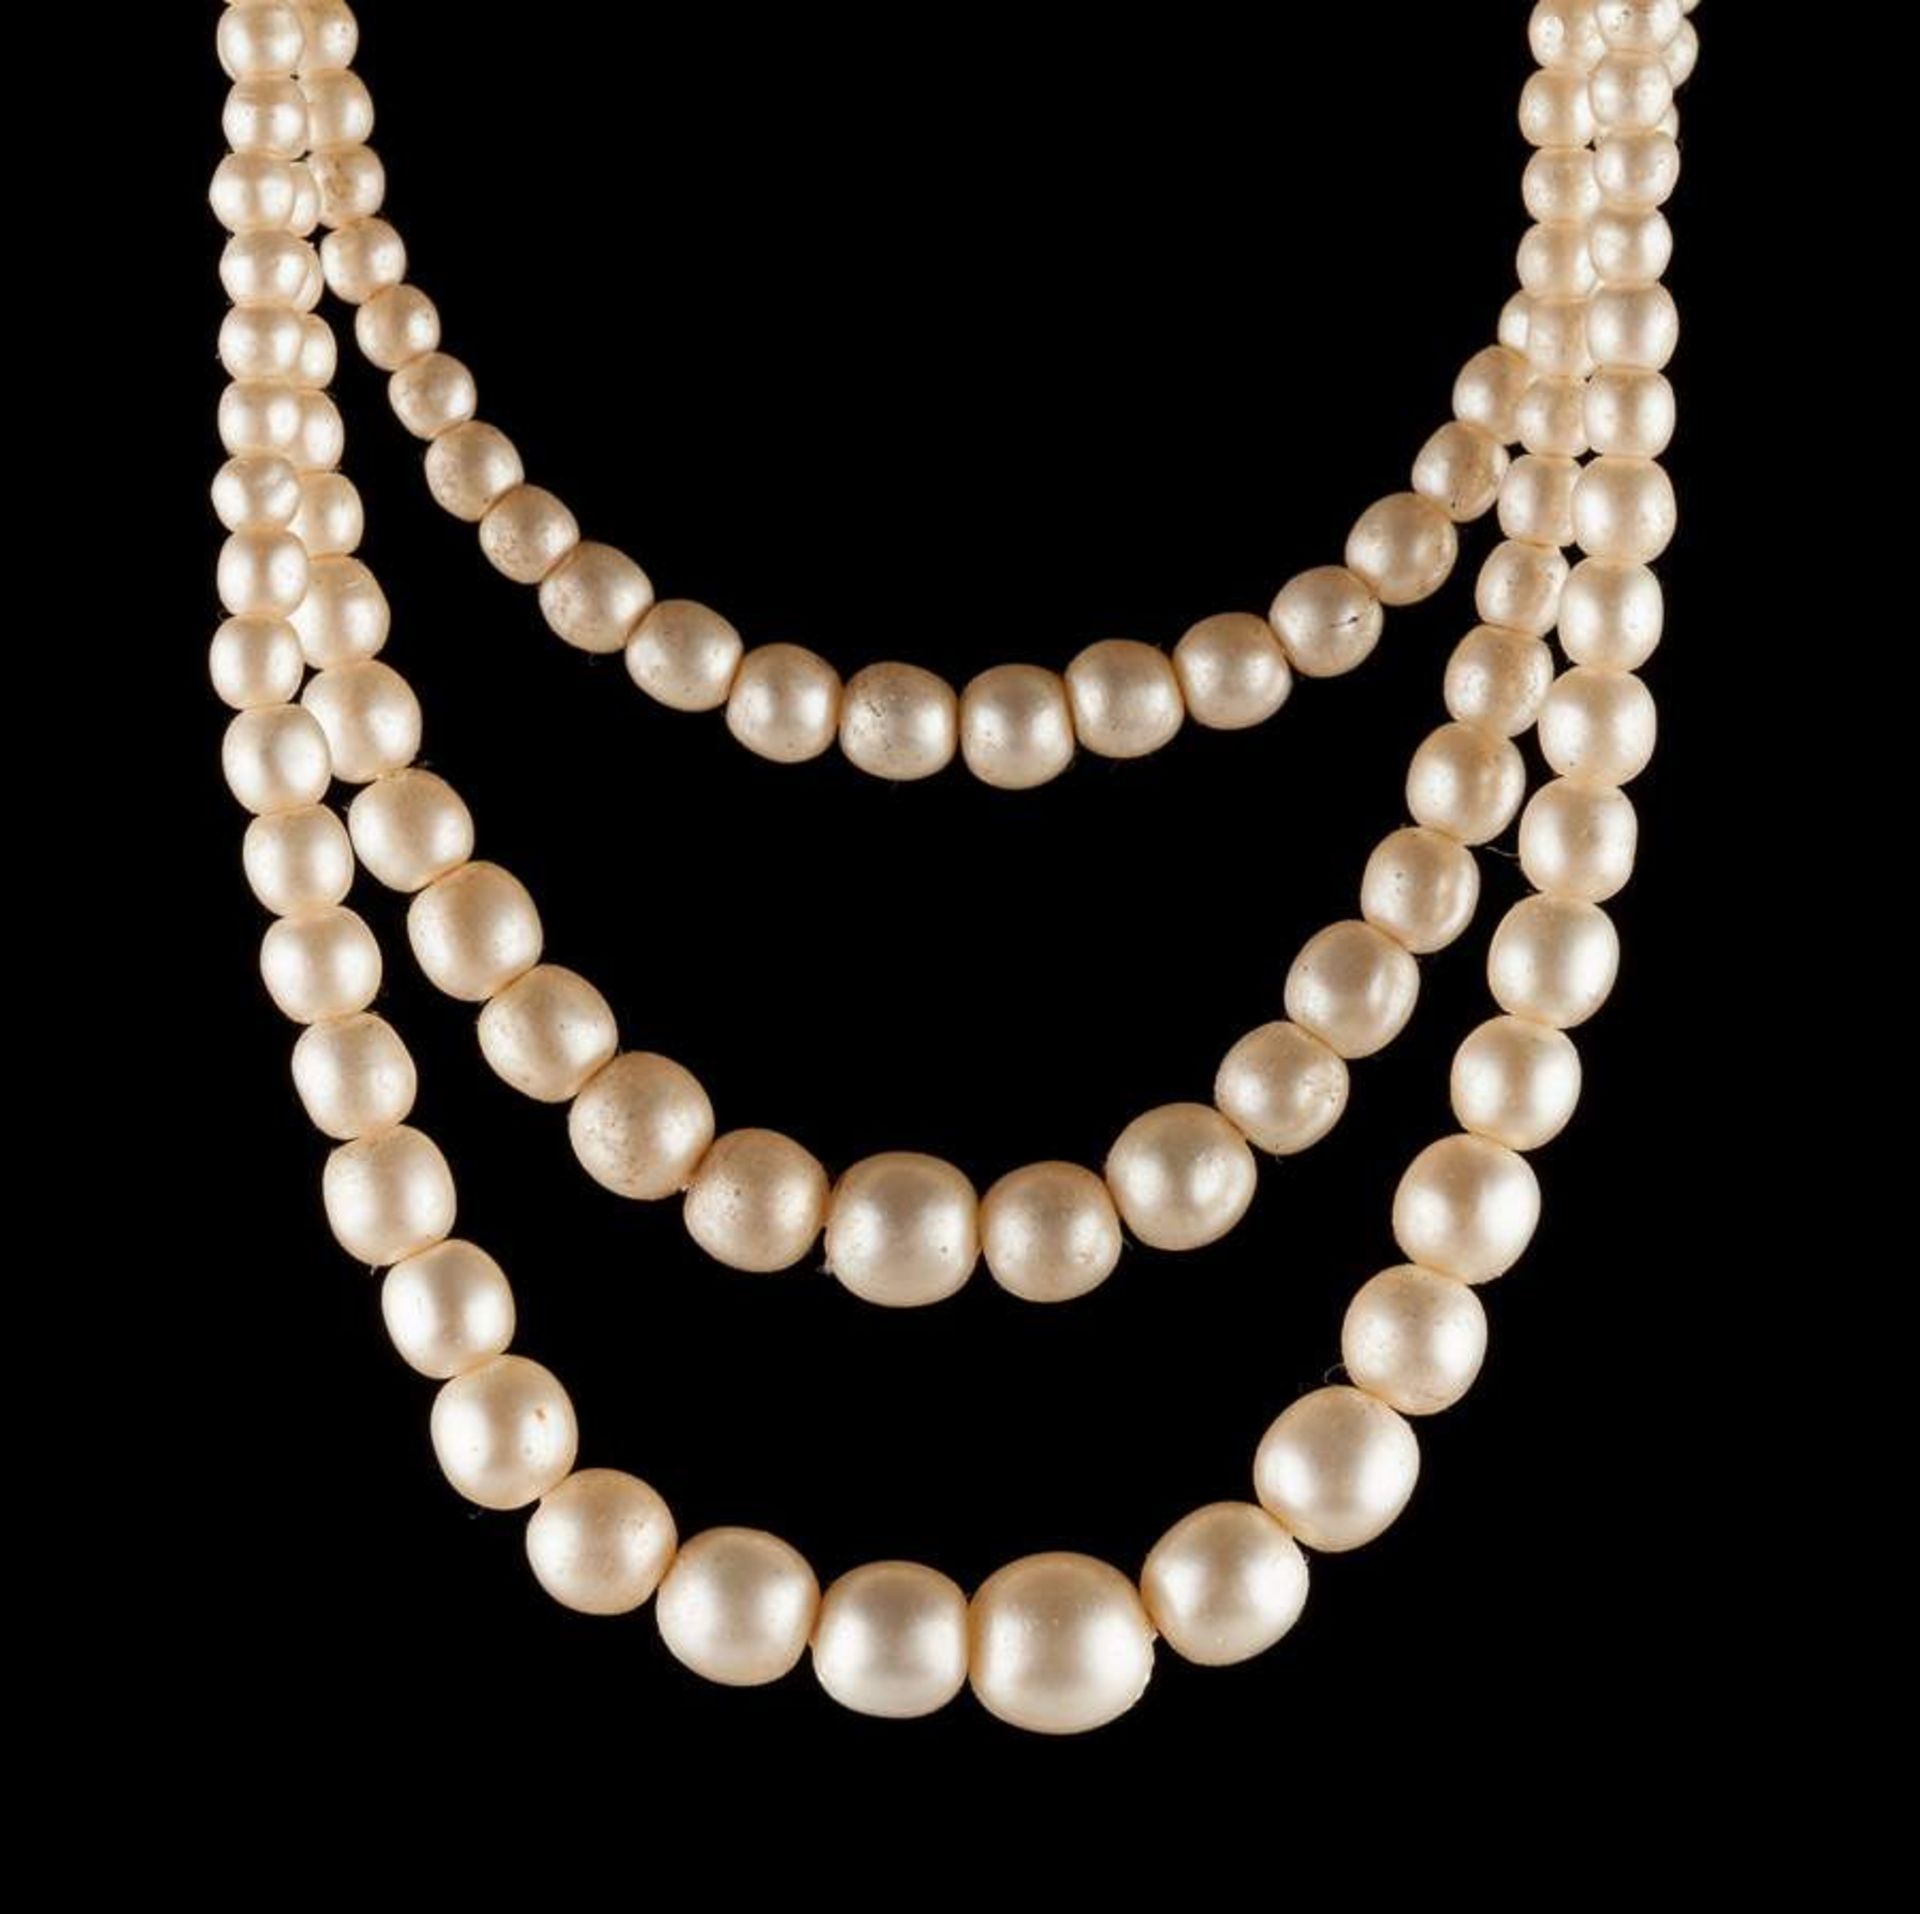 Perlencollier / Pearl colliers3 teilig, L: 42 cm, Ø Perlen 2 mm bis 7 mm /
3 pieces, length: 42